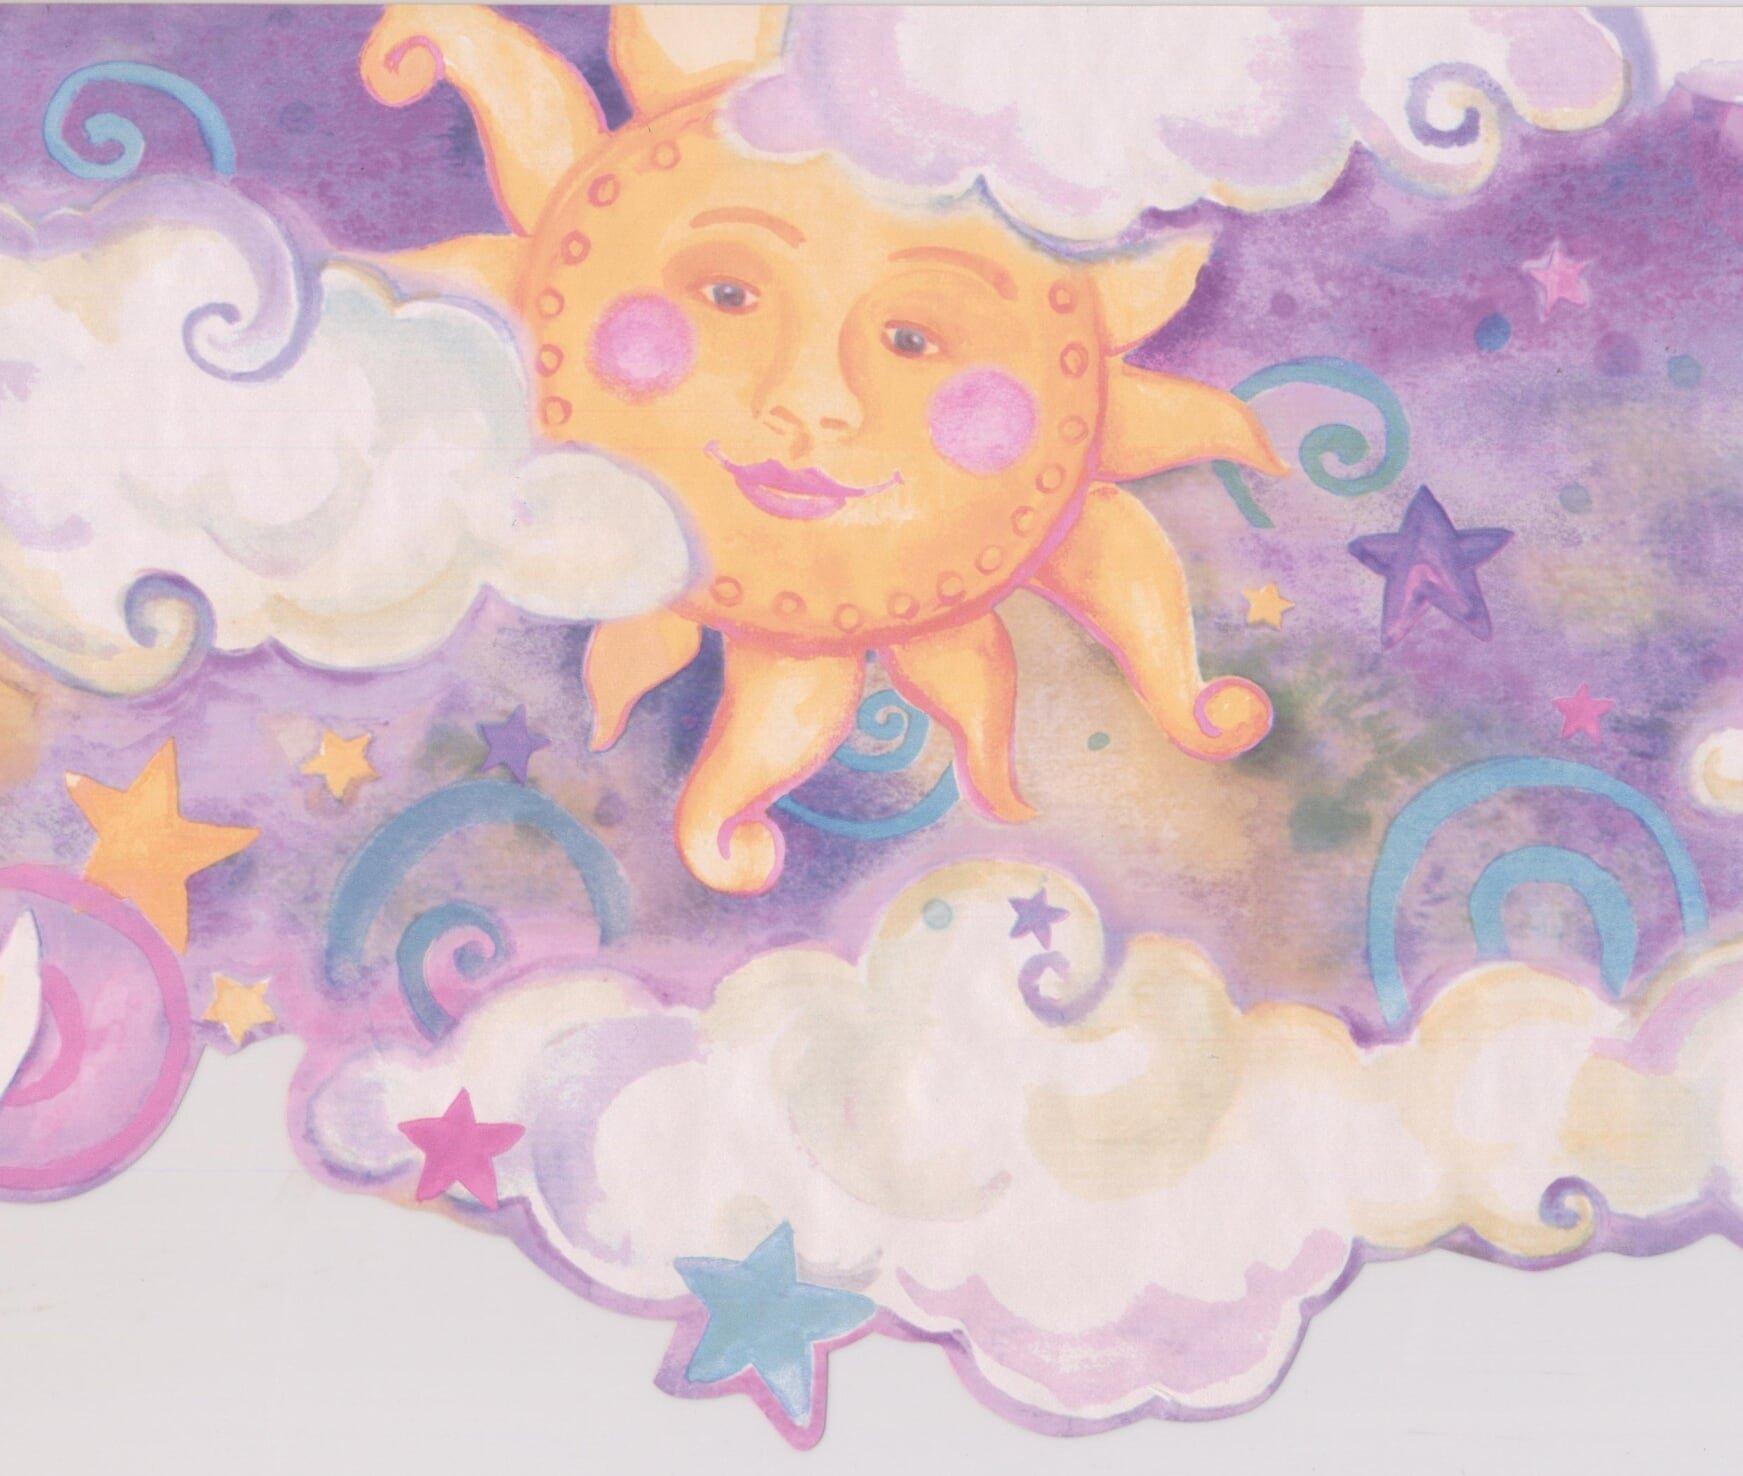 Smiling Sun Moon Purple Clouds Stars Kids Wallpaper Border Retro